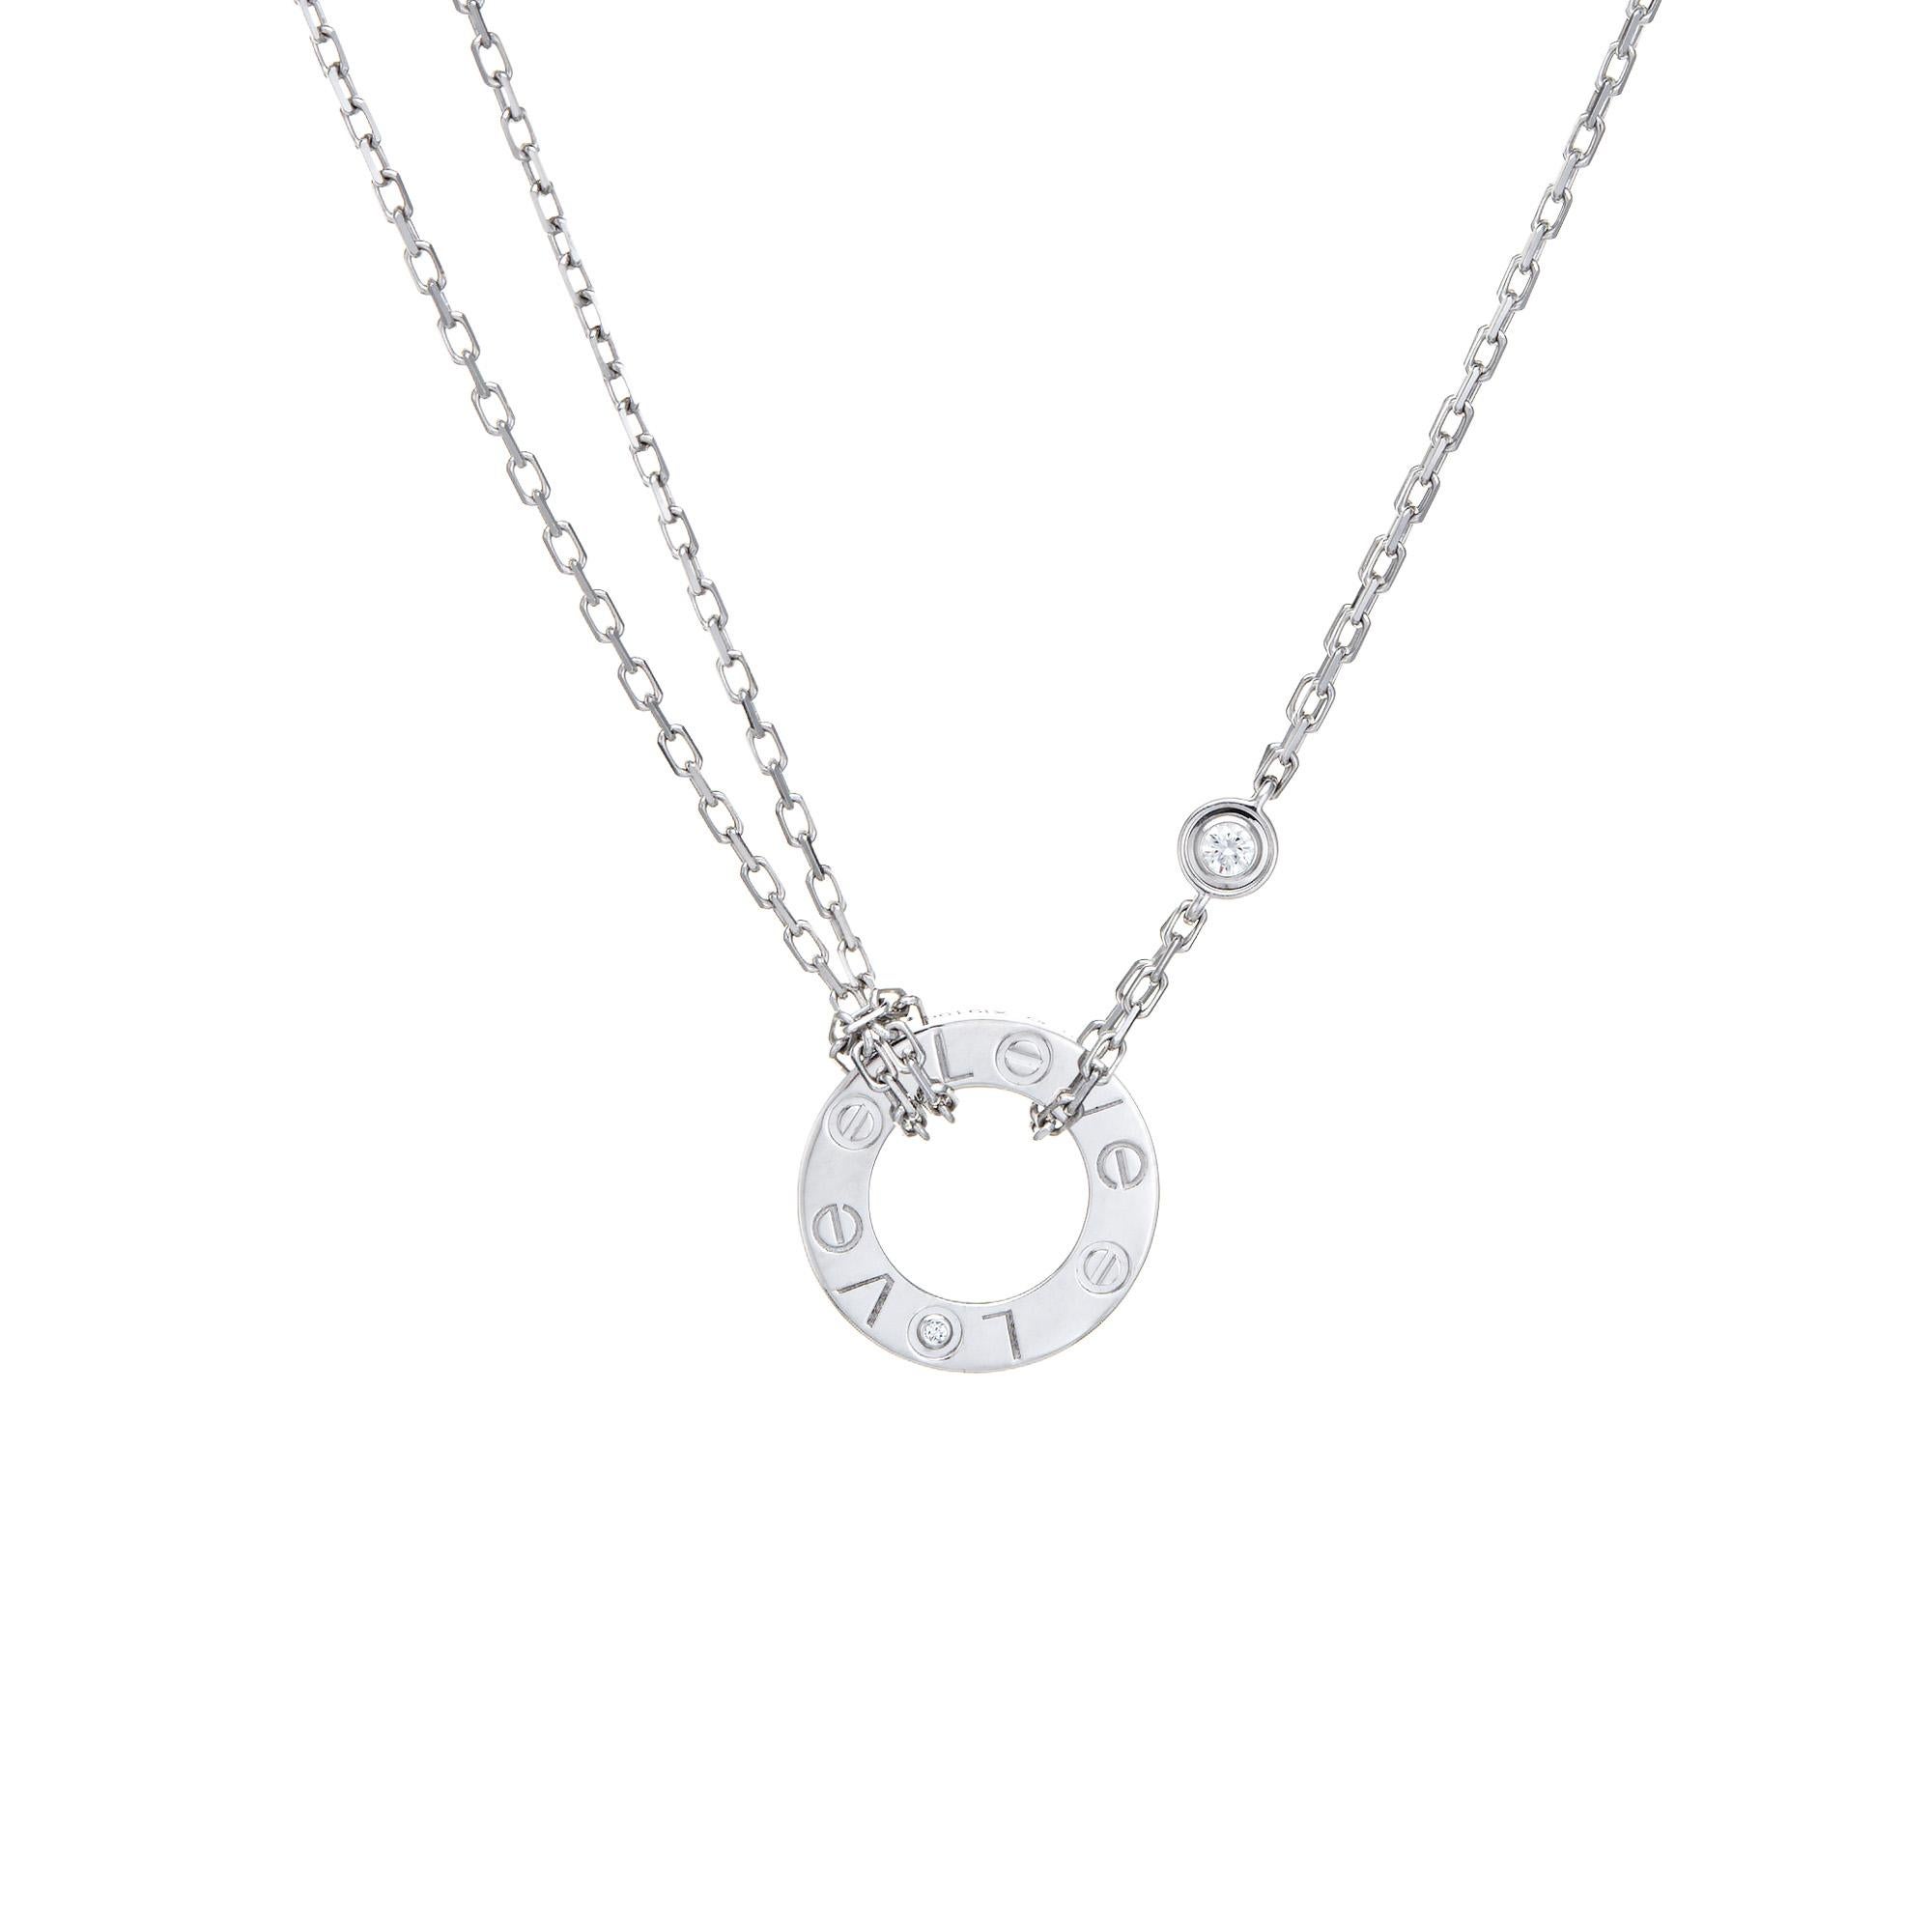 Round Cut Cartier Diamond Love Necklace 18k White Gold Estate Jewelry Receipt 16